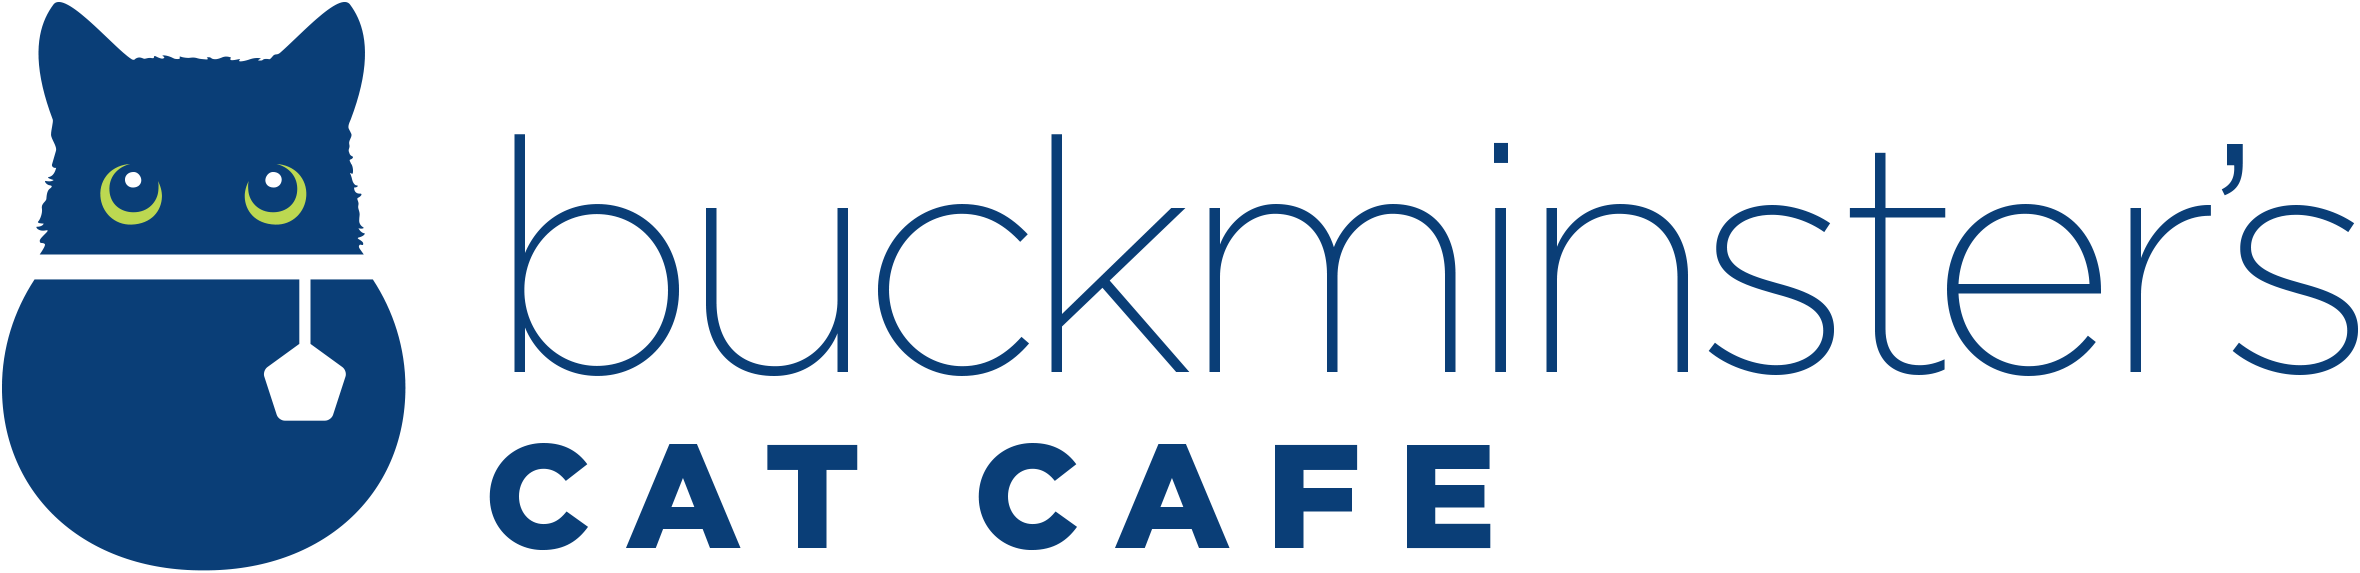 Buckminster&#39;s Cat Cafe